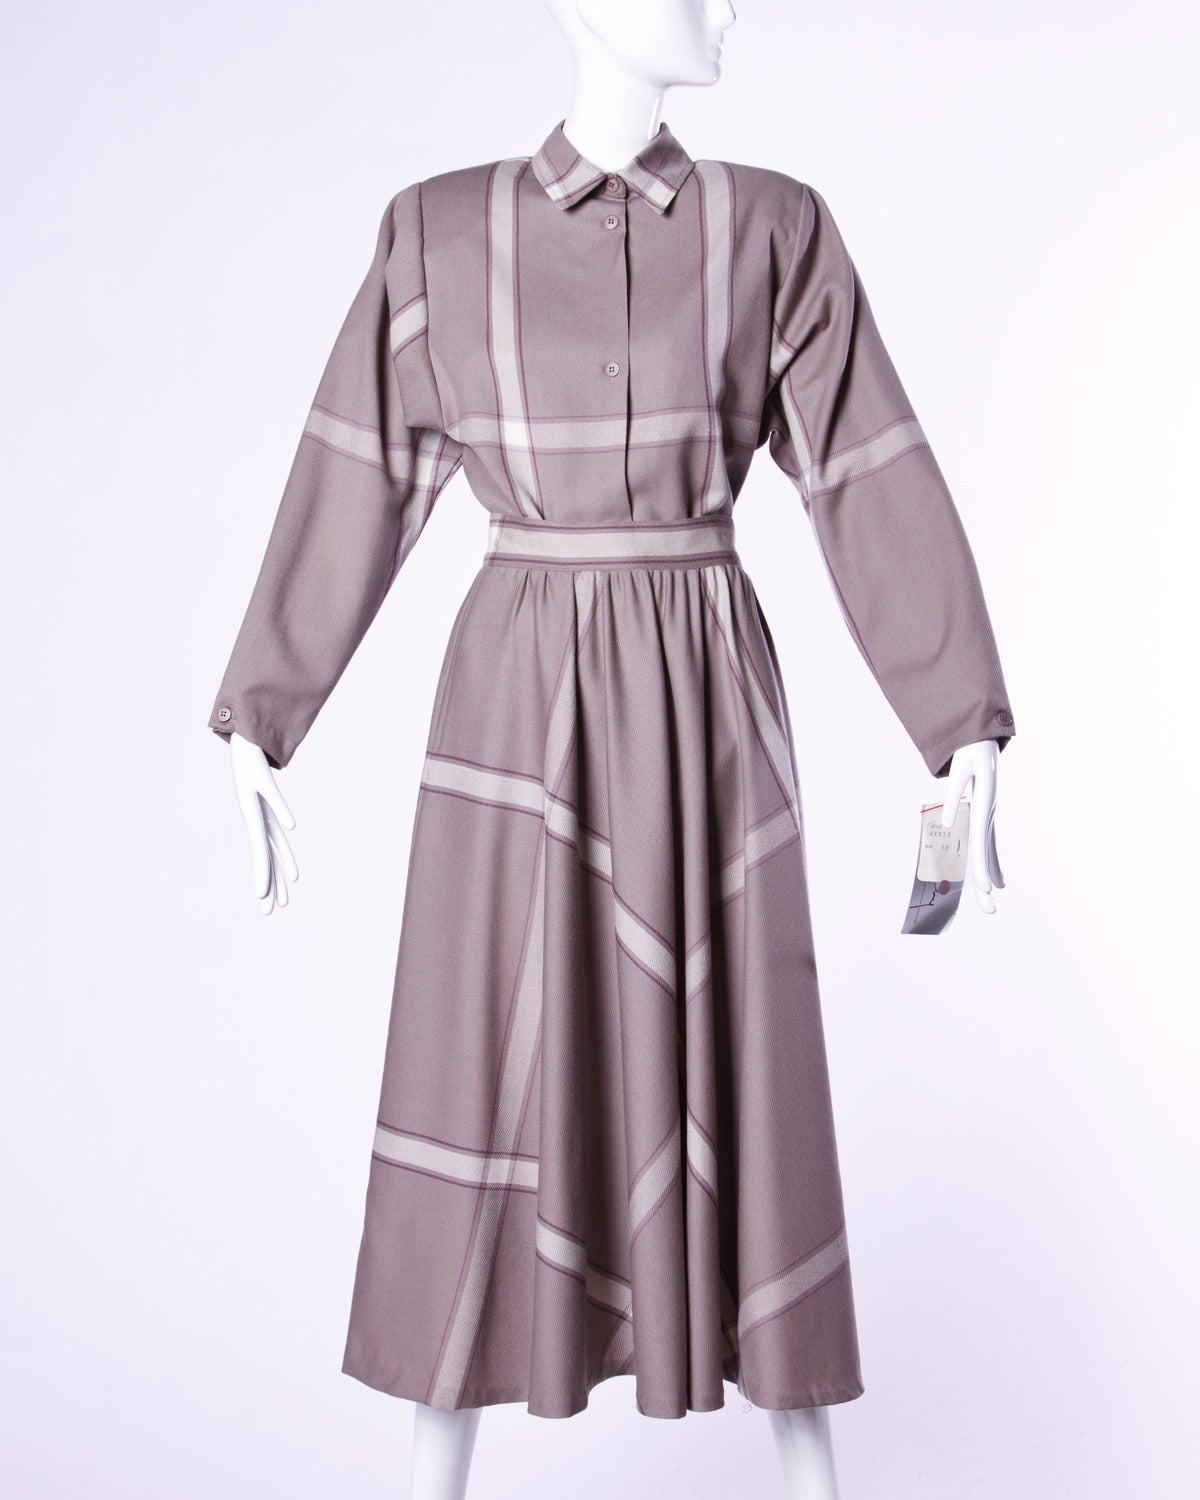 Unworn Givenchy Vintage 3-Piece Plaid Wool Skirt, Top and Belt Ensemble 1